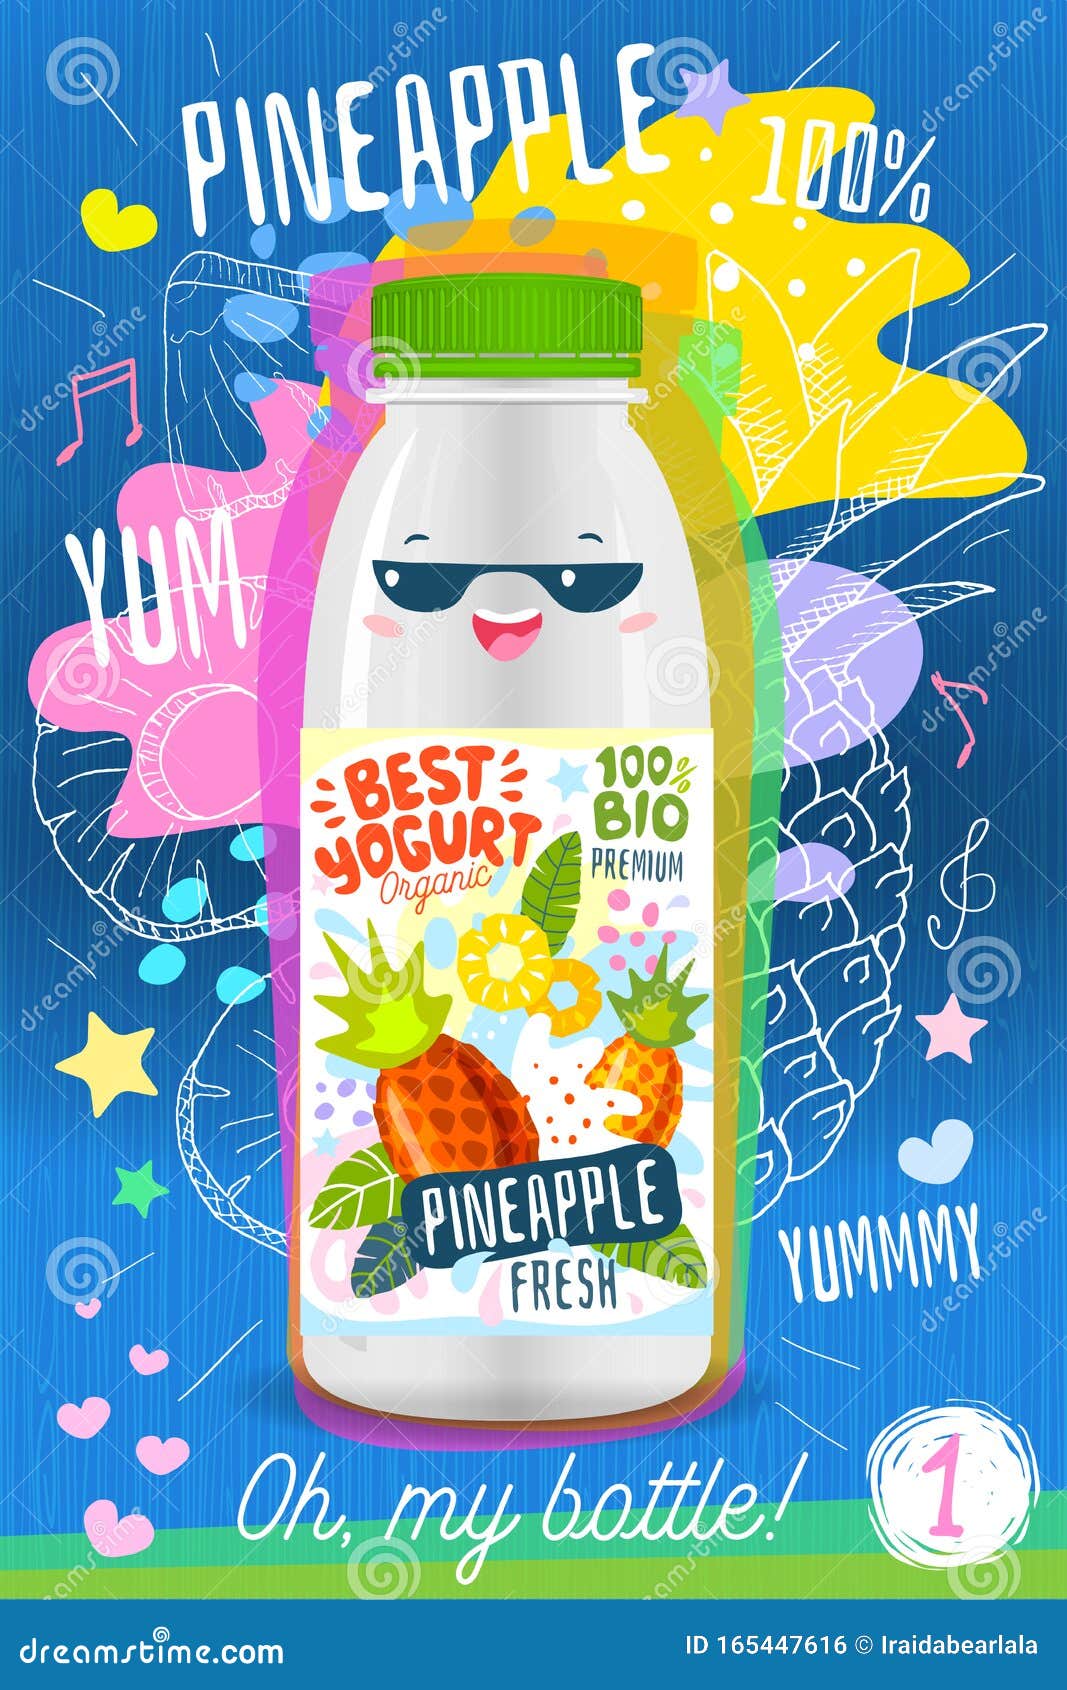 Download Abstract Splash Cute Yogurt Bottle Label Template Advertising Poster Fruits Organic Yogurt Milk Package Design Stock Vector Illustration Of Cream Fruits 165447616 Yellowimages Mockups